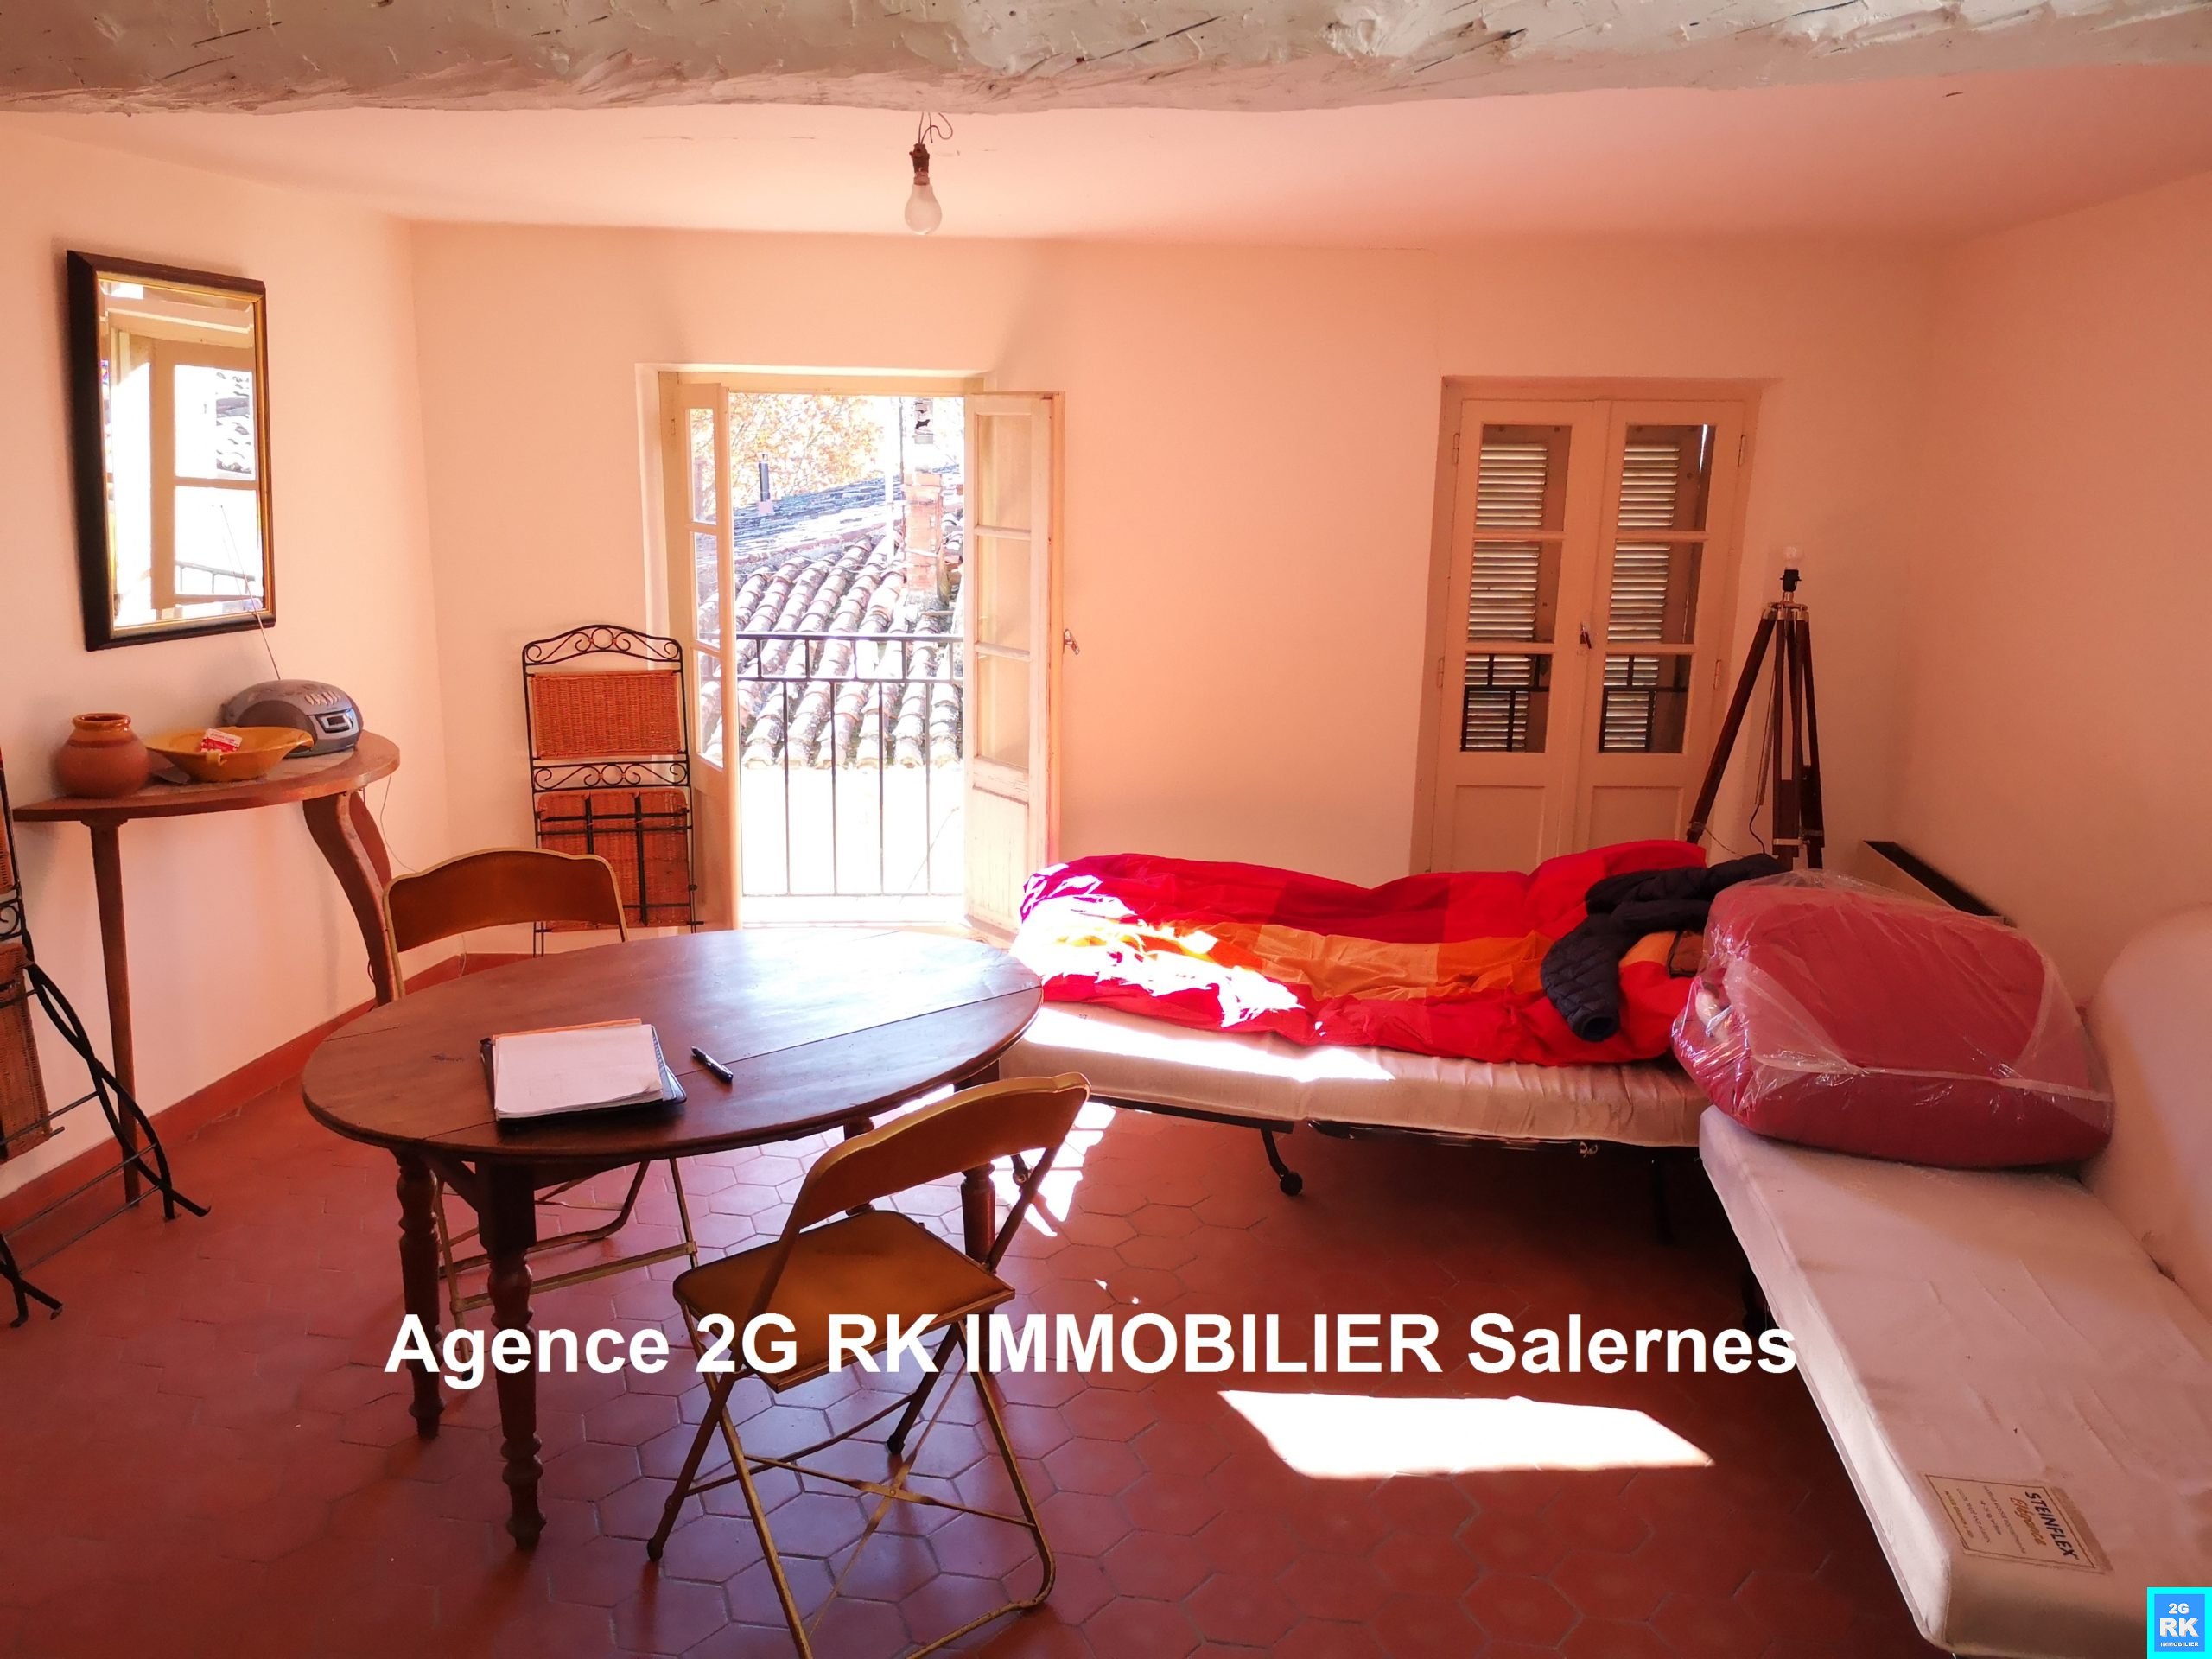 Appartement F2 en duplex, 45 m² + terrasse, centre Salernes.